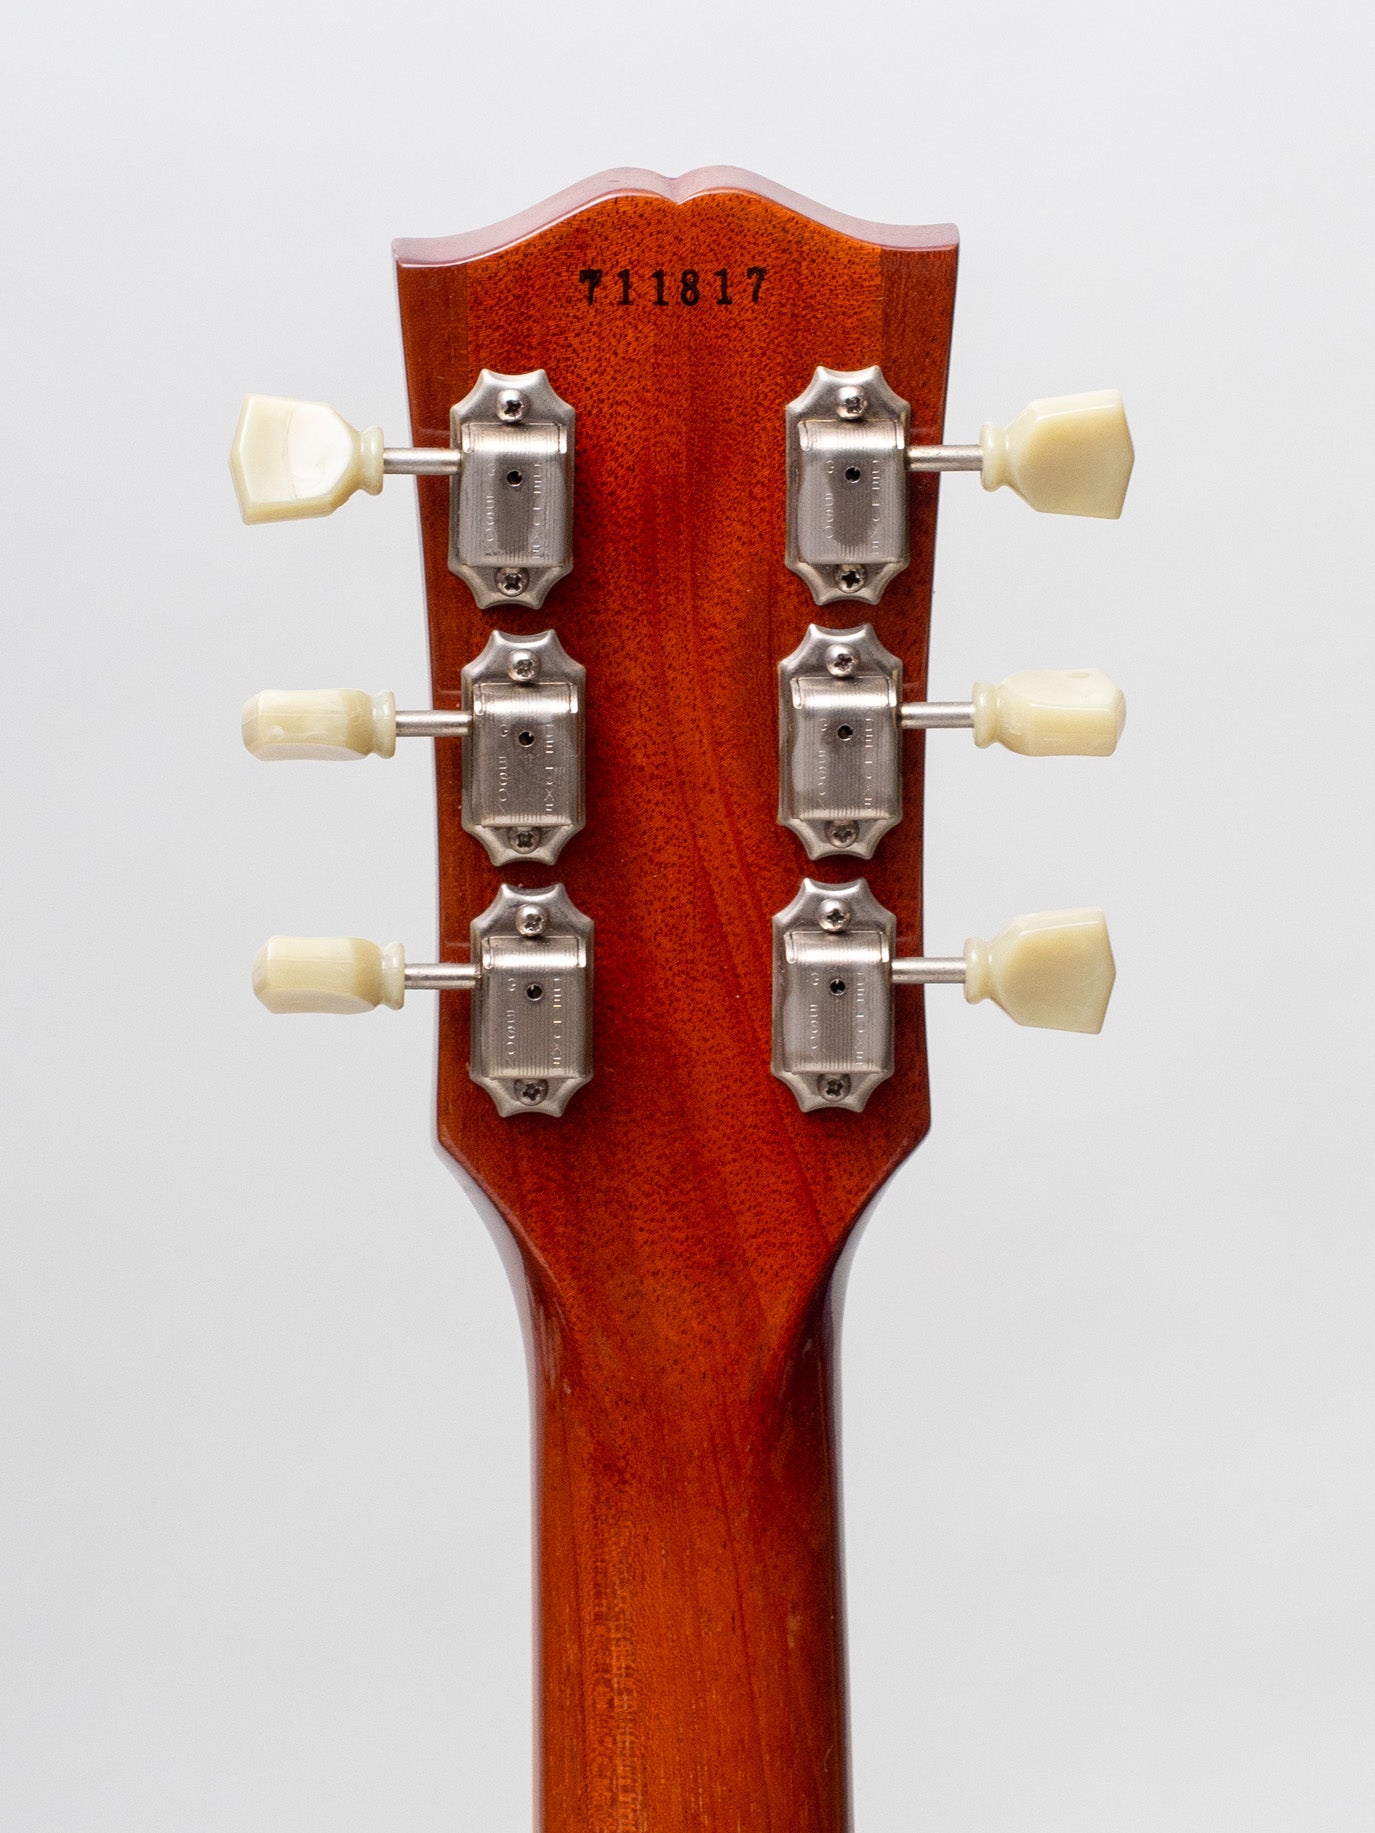 2000 Gibson Custom Shop Reissue 1957 Les Paul